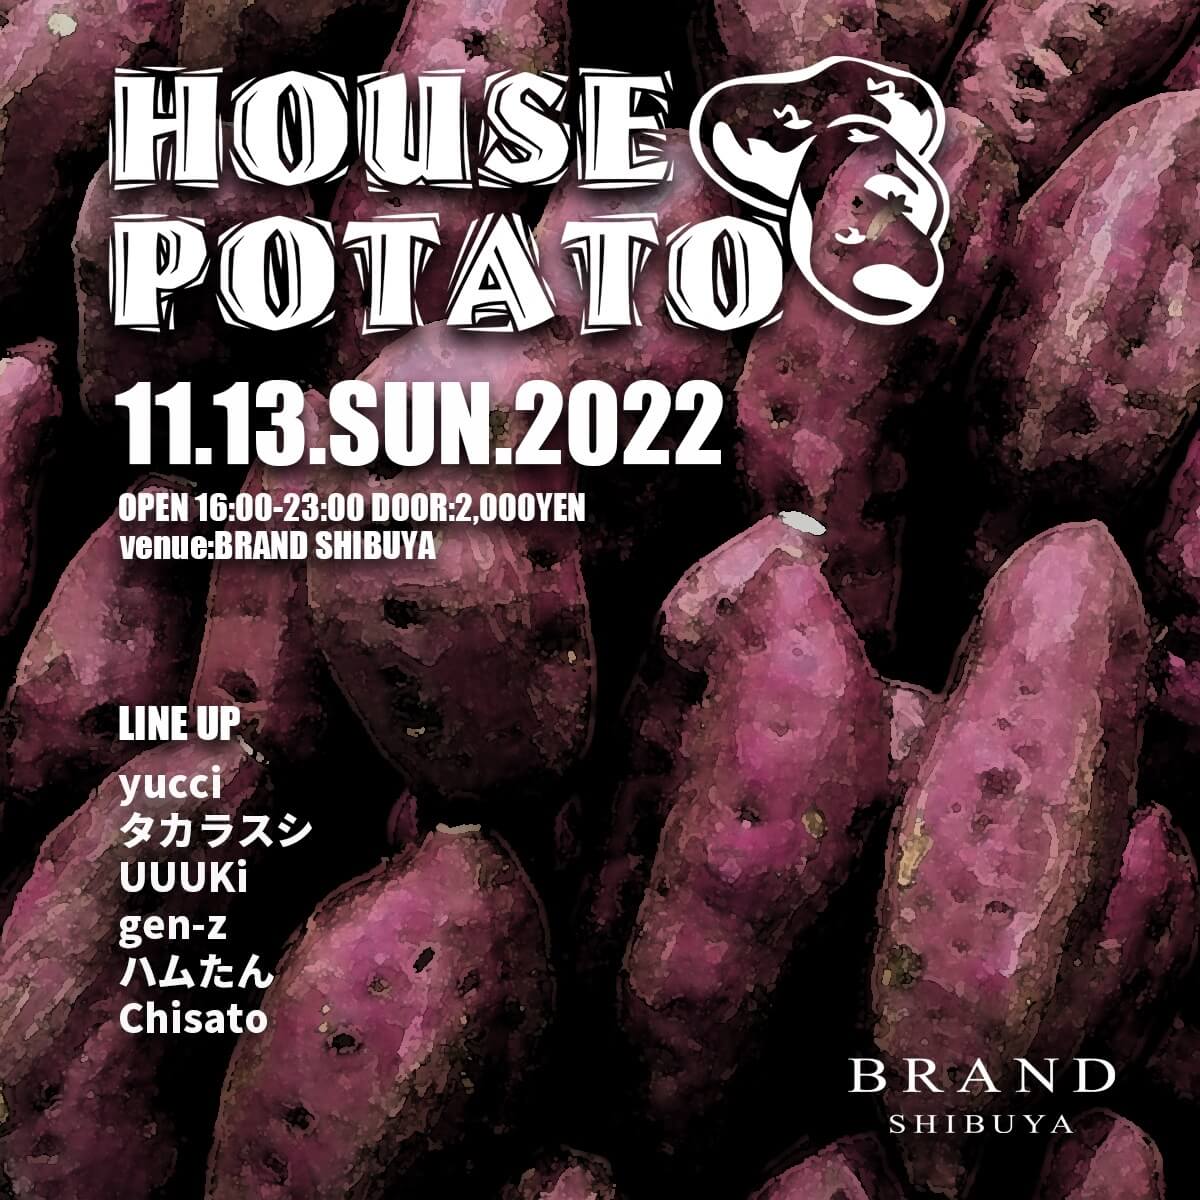 HOUSE POTATO 2022年11月13日（日曜日）に渋谷 クラブのBRAND SHIBUYAで開催されるイベント